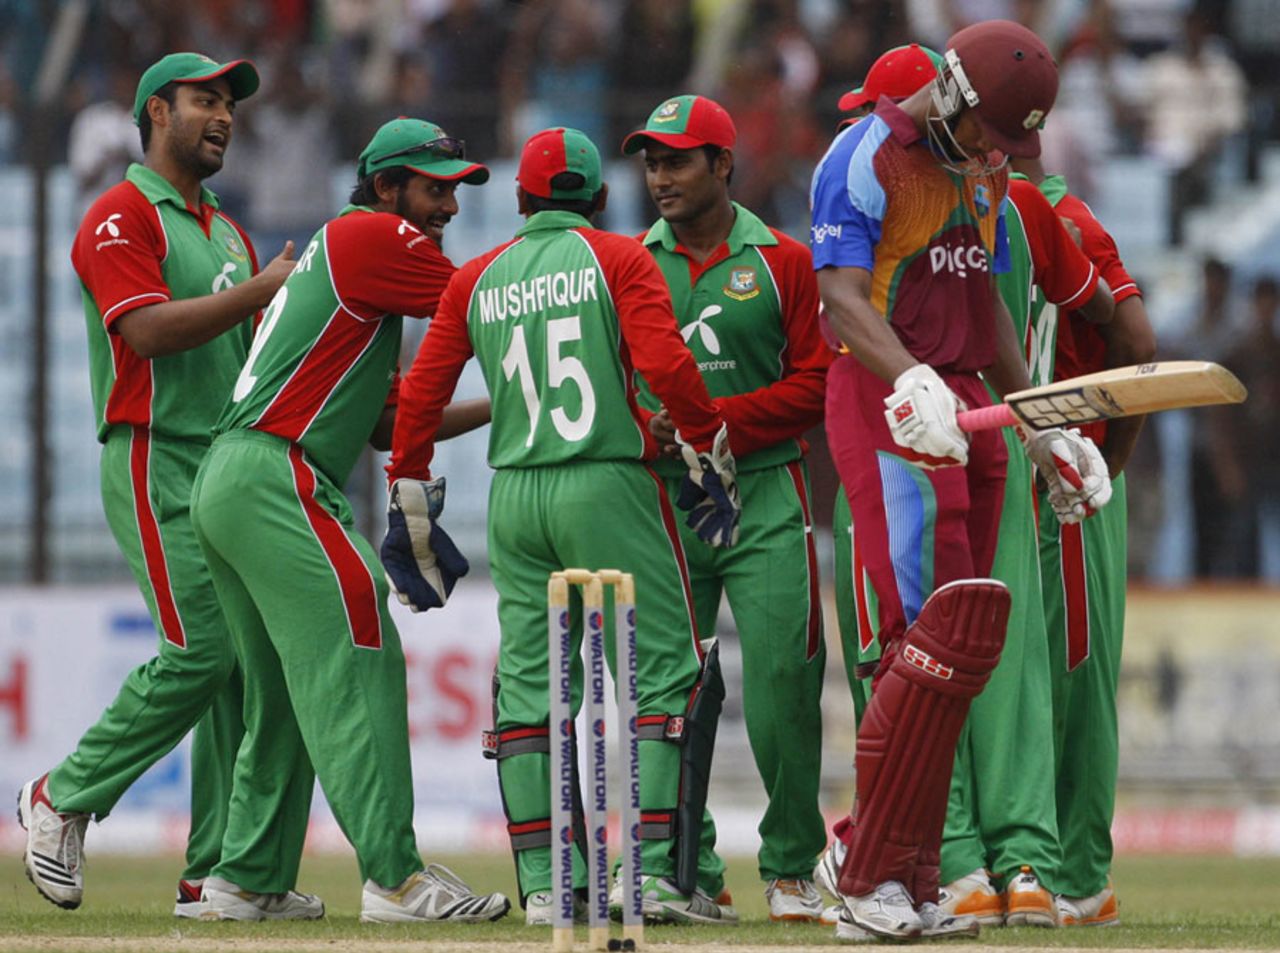 Bangladesh get together after claiming a wicket, Bangladesh v West Indies, 3rd ODI, Chittagong, October 18, 2011